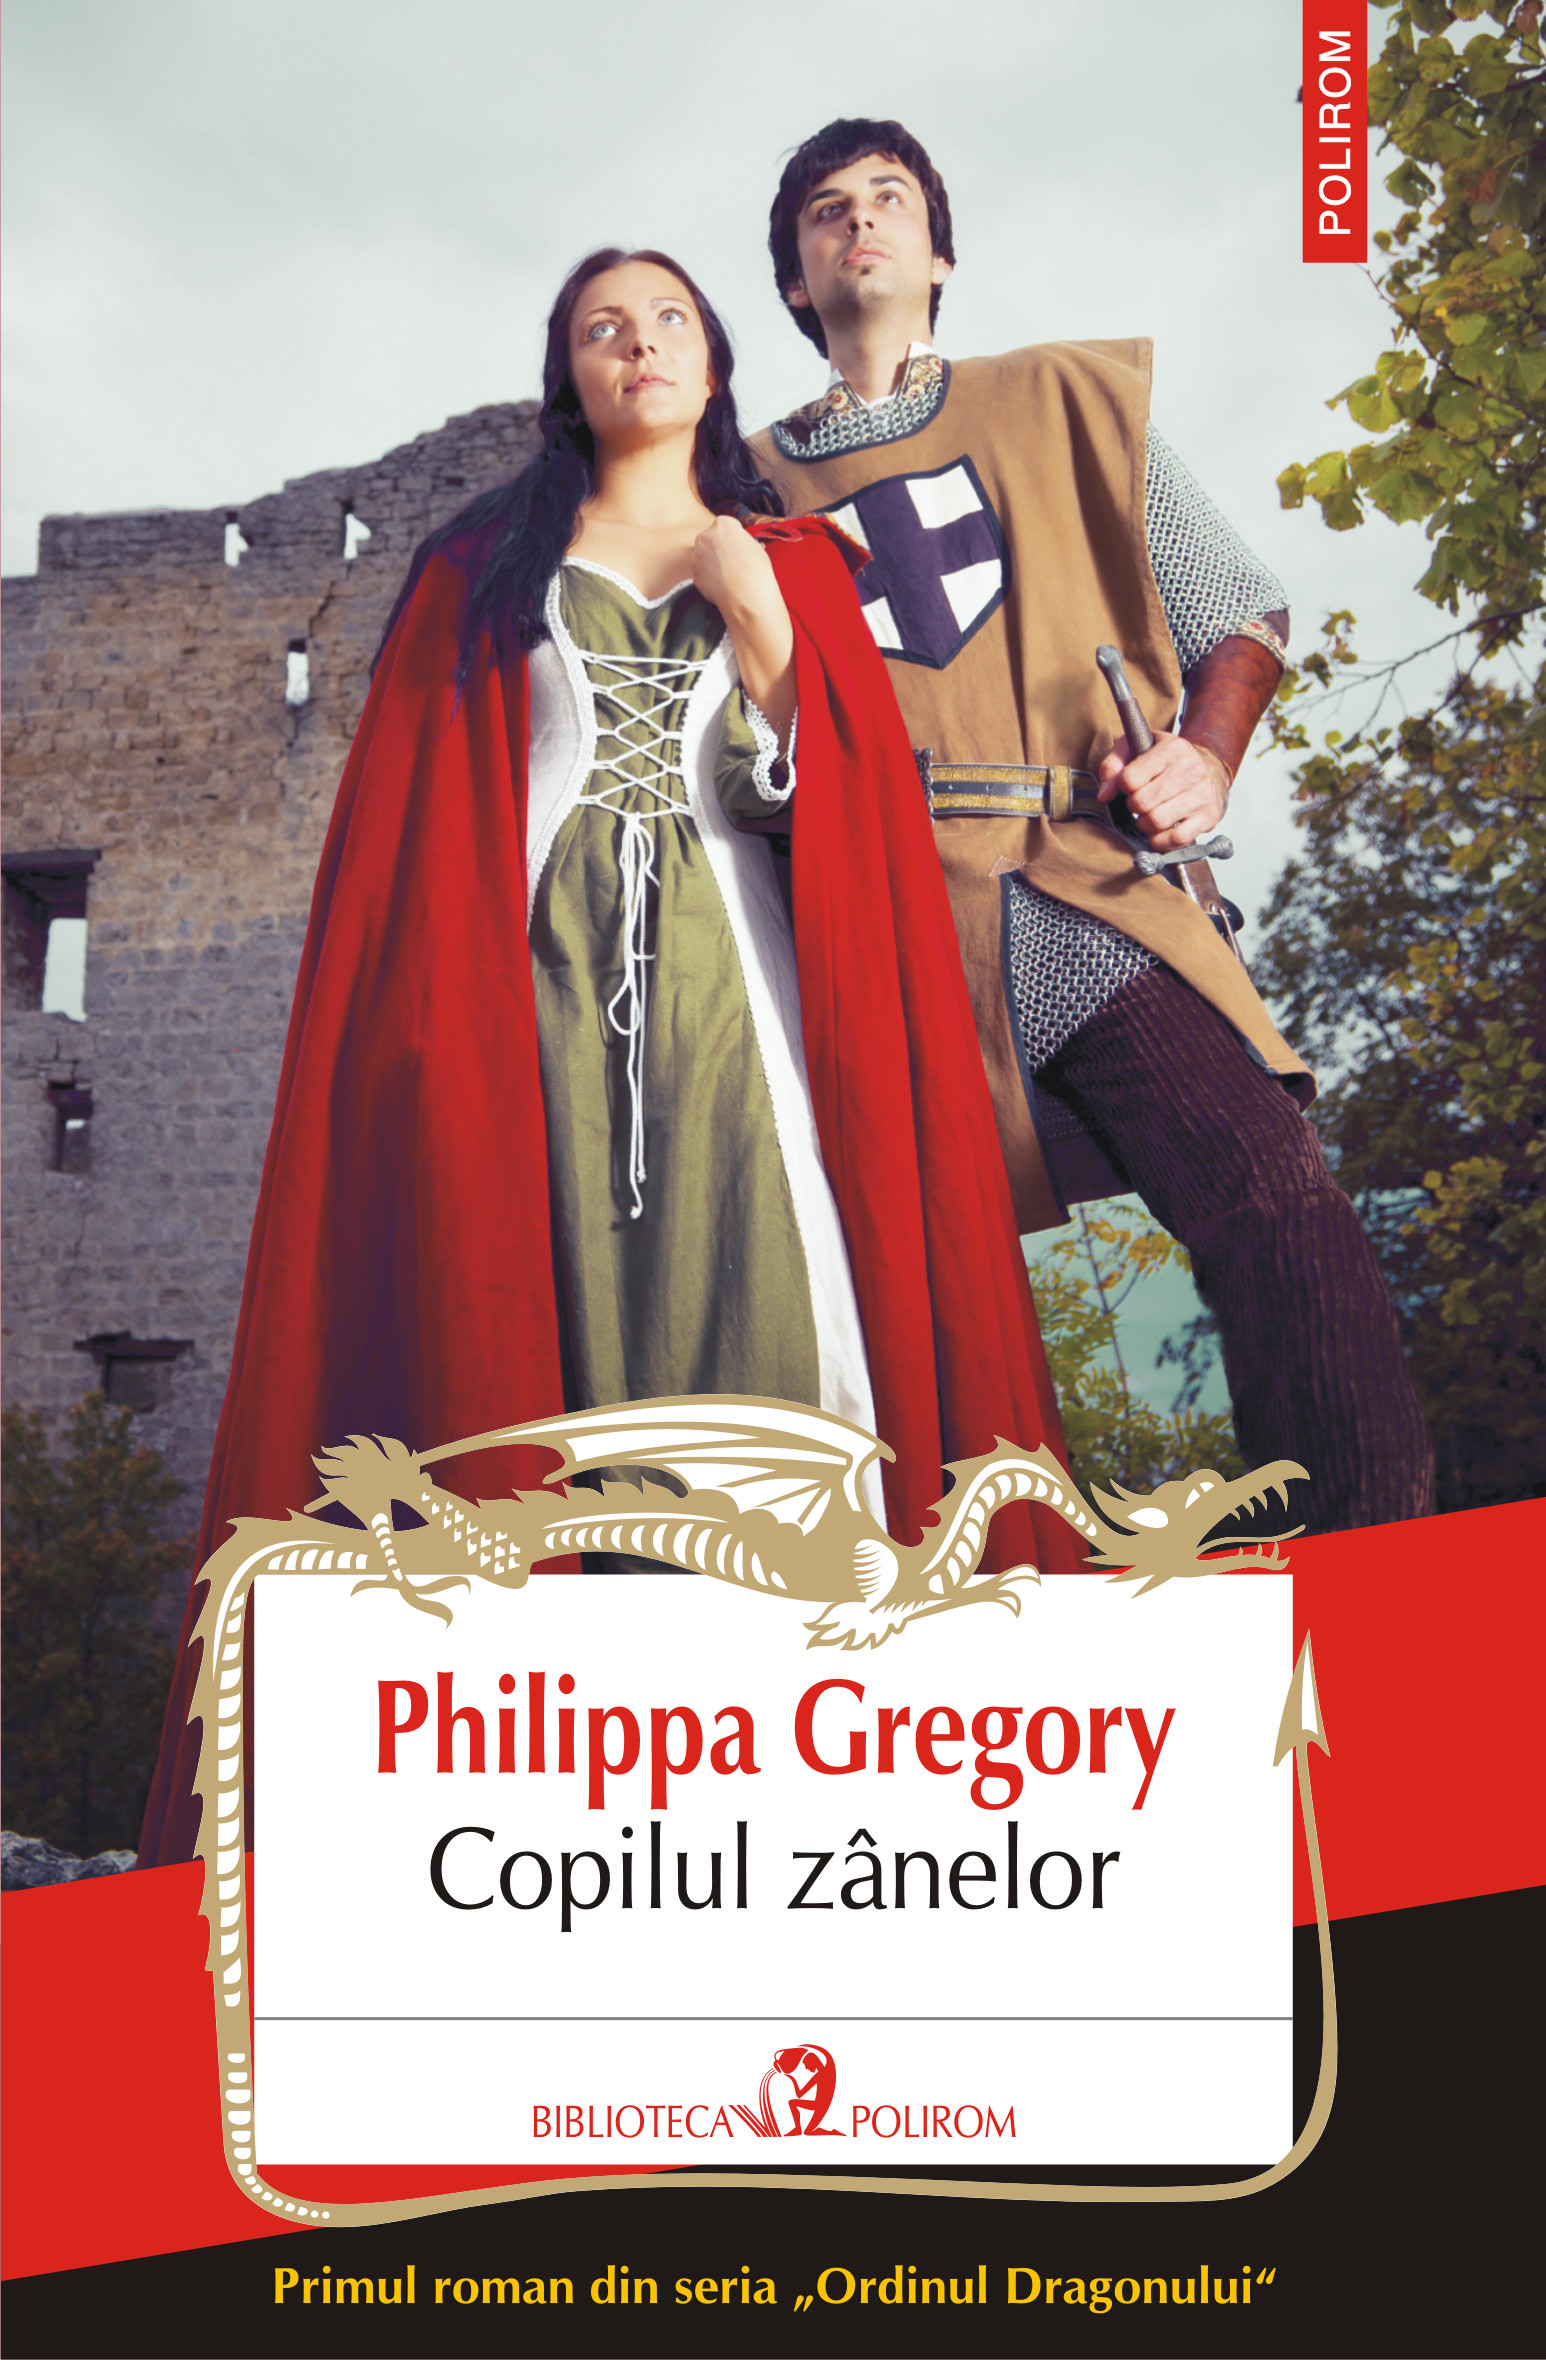 eBook Copilul zanelor - Philippa Gregory